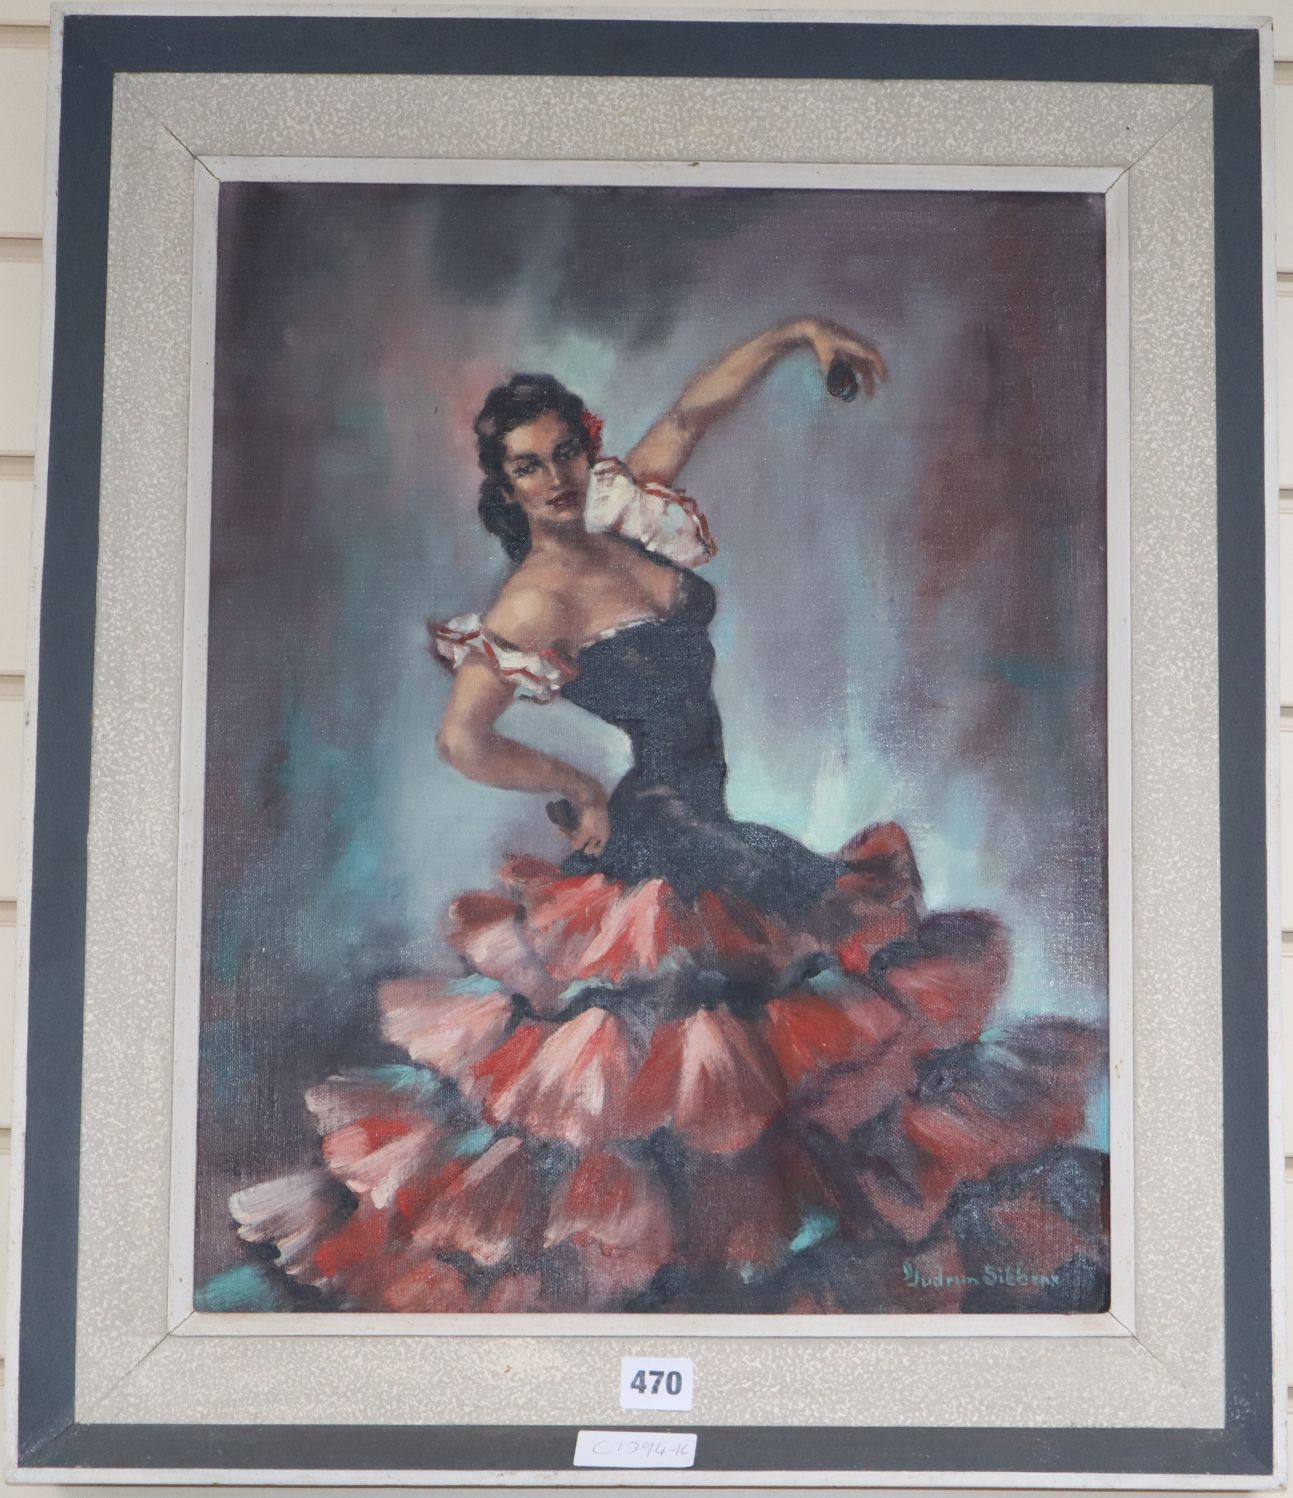 Gudrun Sibbens, oil on canvas board, Flamenco dancer, signed, 50 x 40cm